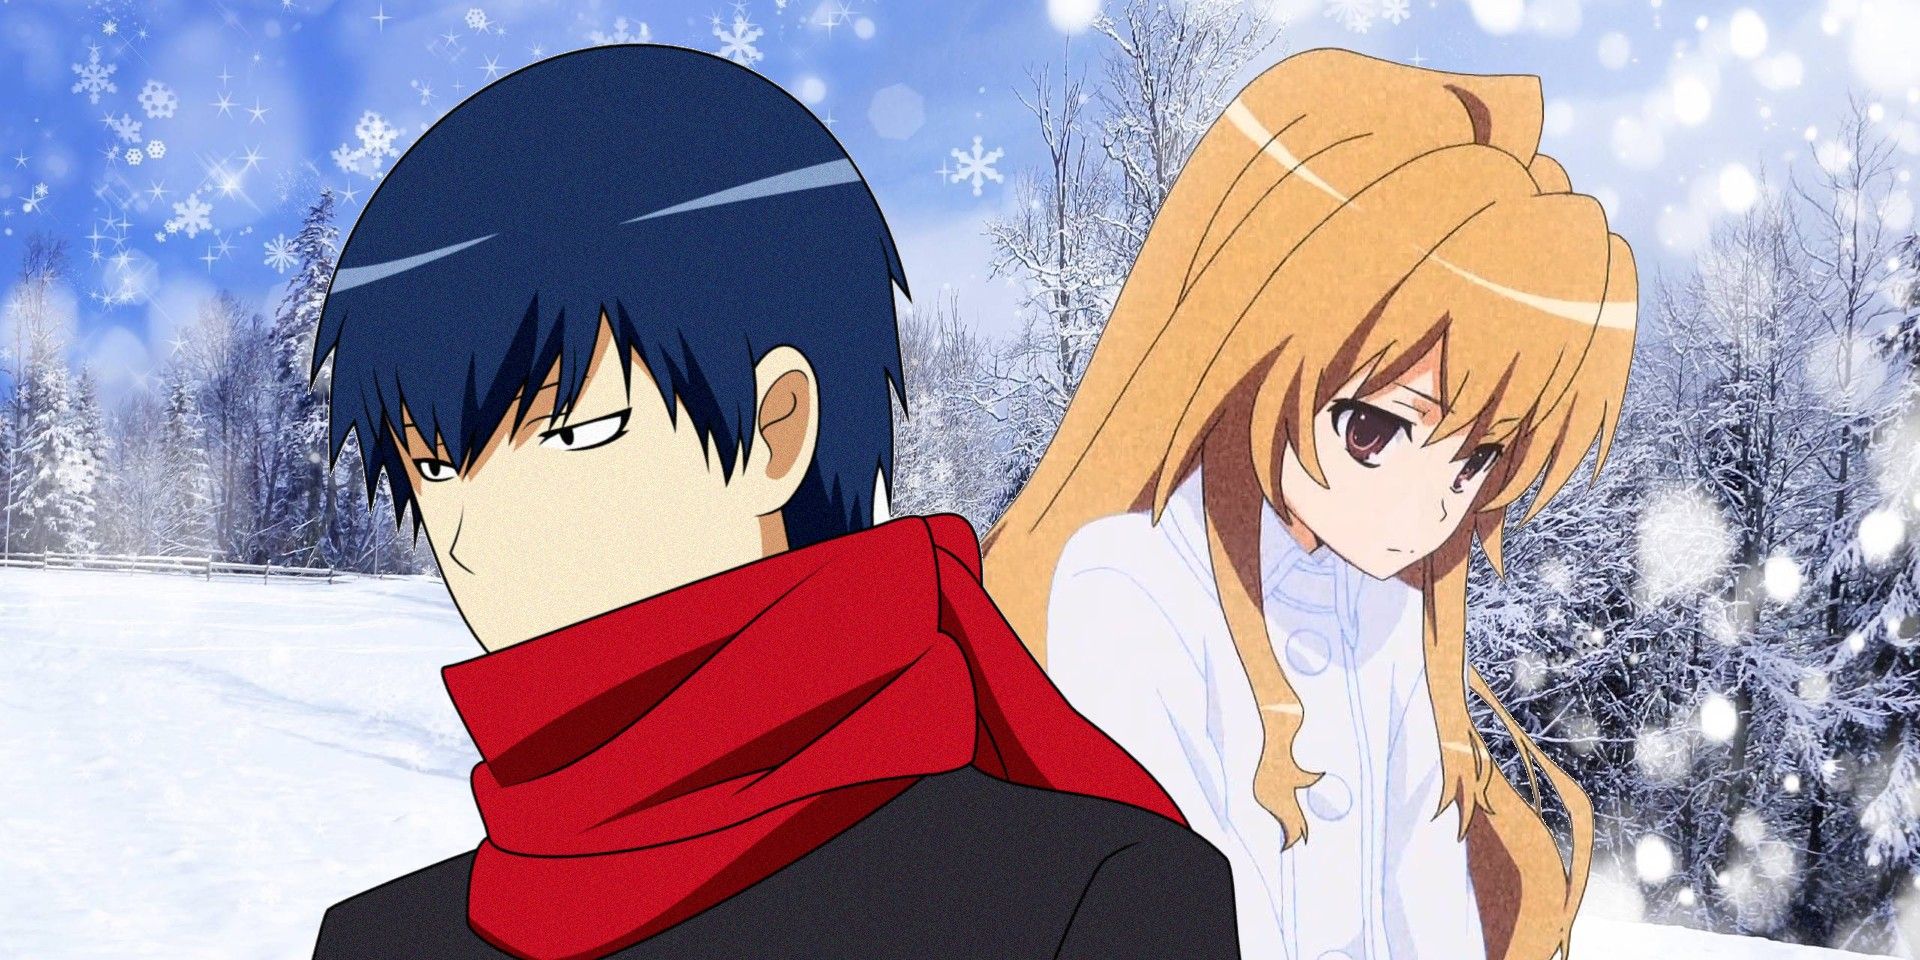 Ryuji and Taiga find heartbreak on Christmas in Toradora